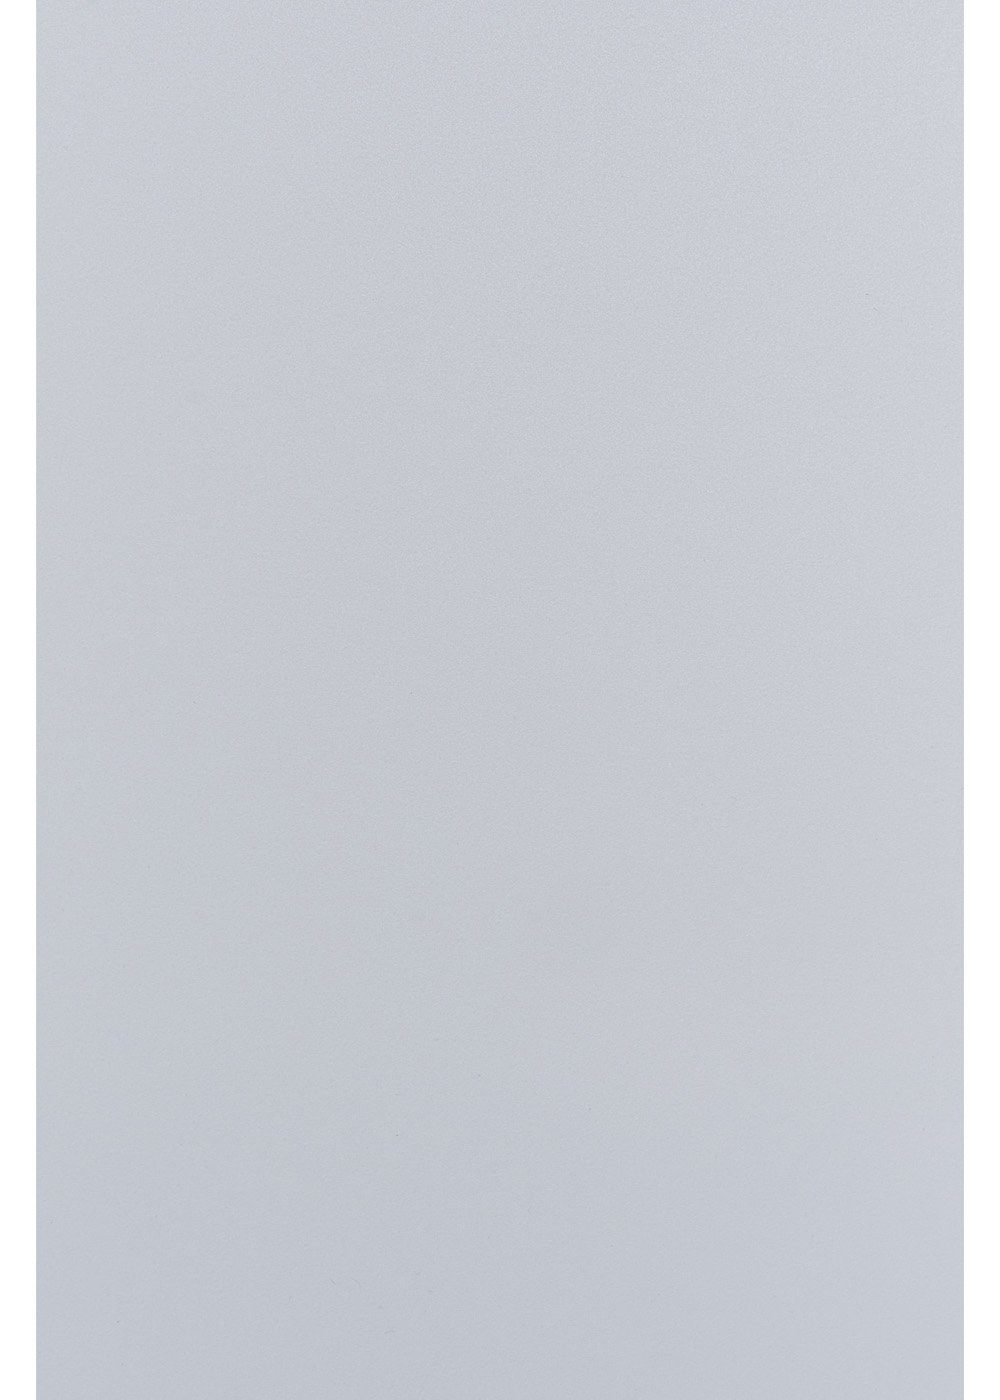 Hilltop Transparentpapier Reflektierende Transferfolie, Textilfolie, mehrfarbig, 30x20 cm Weiss